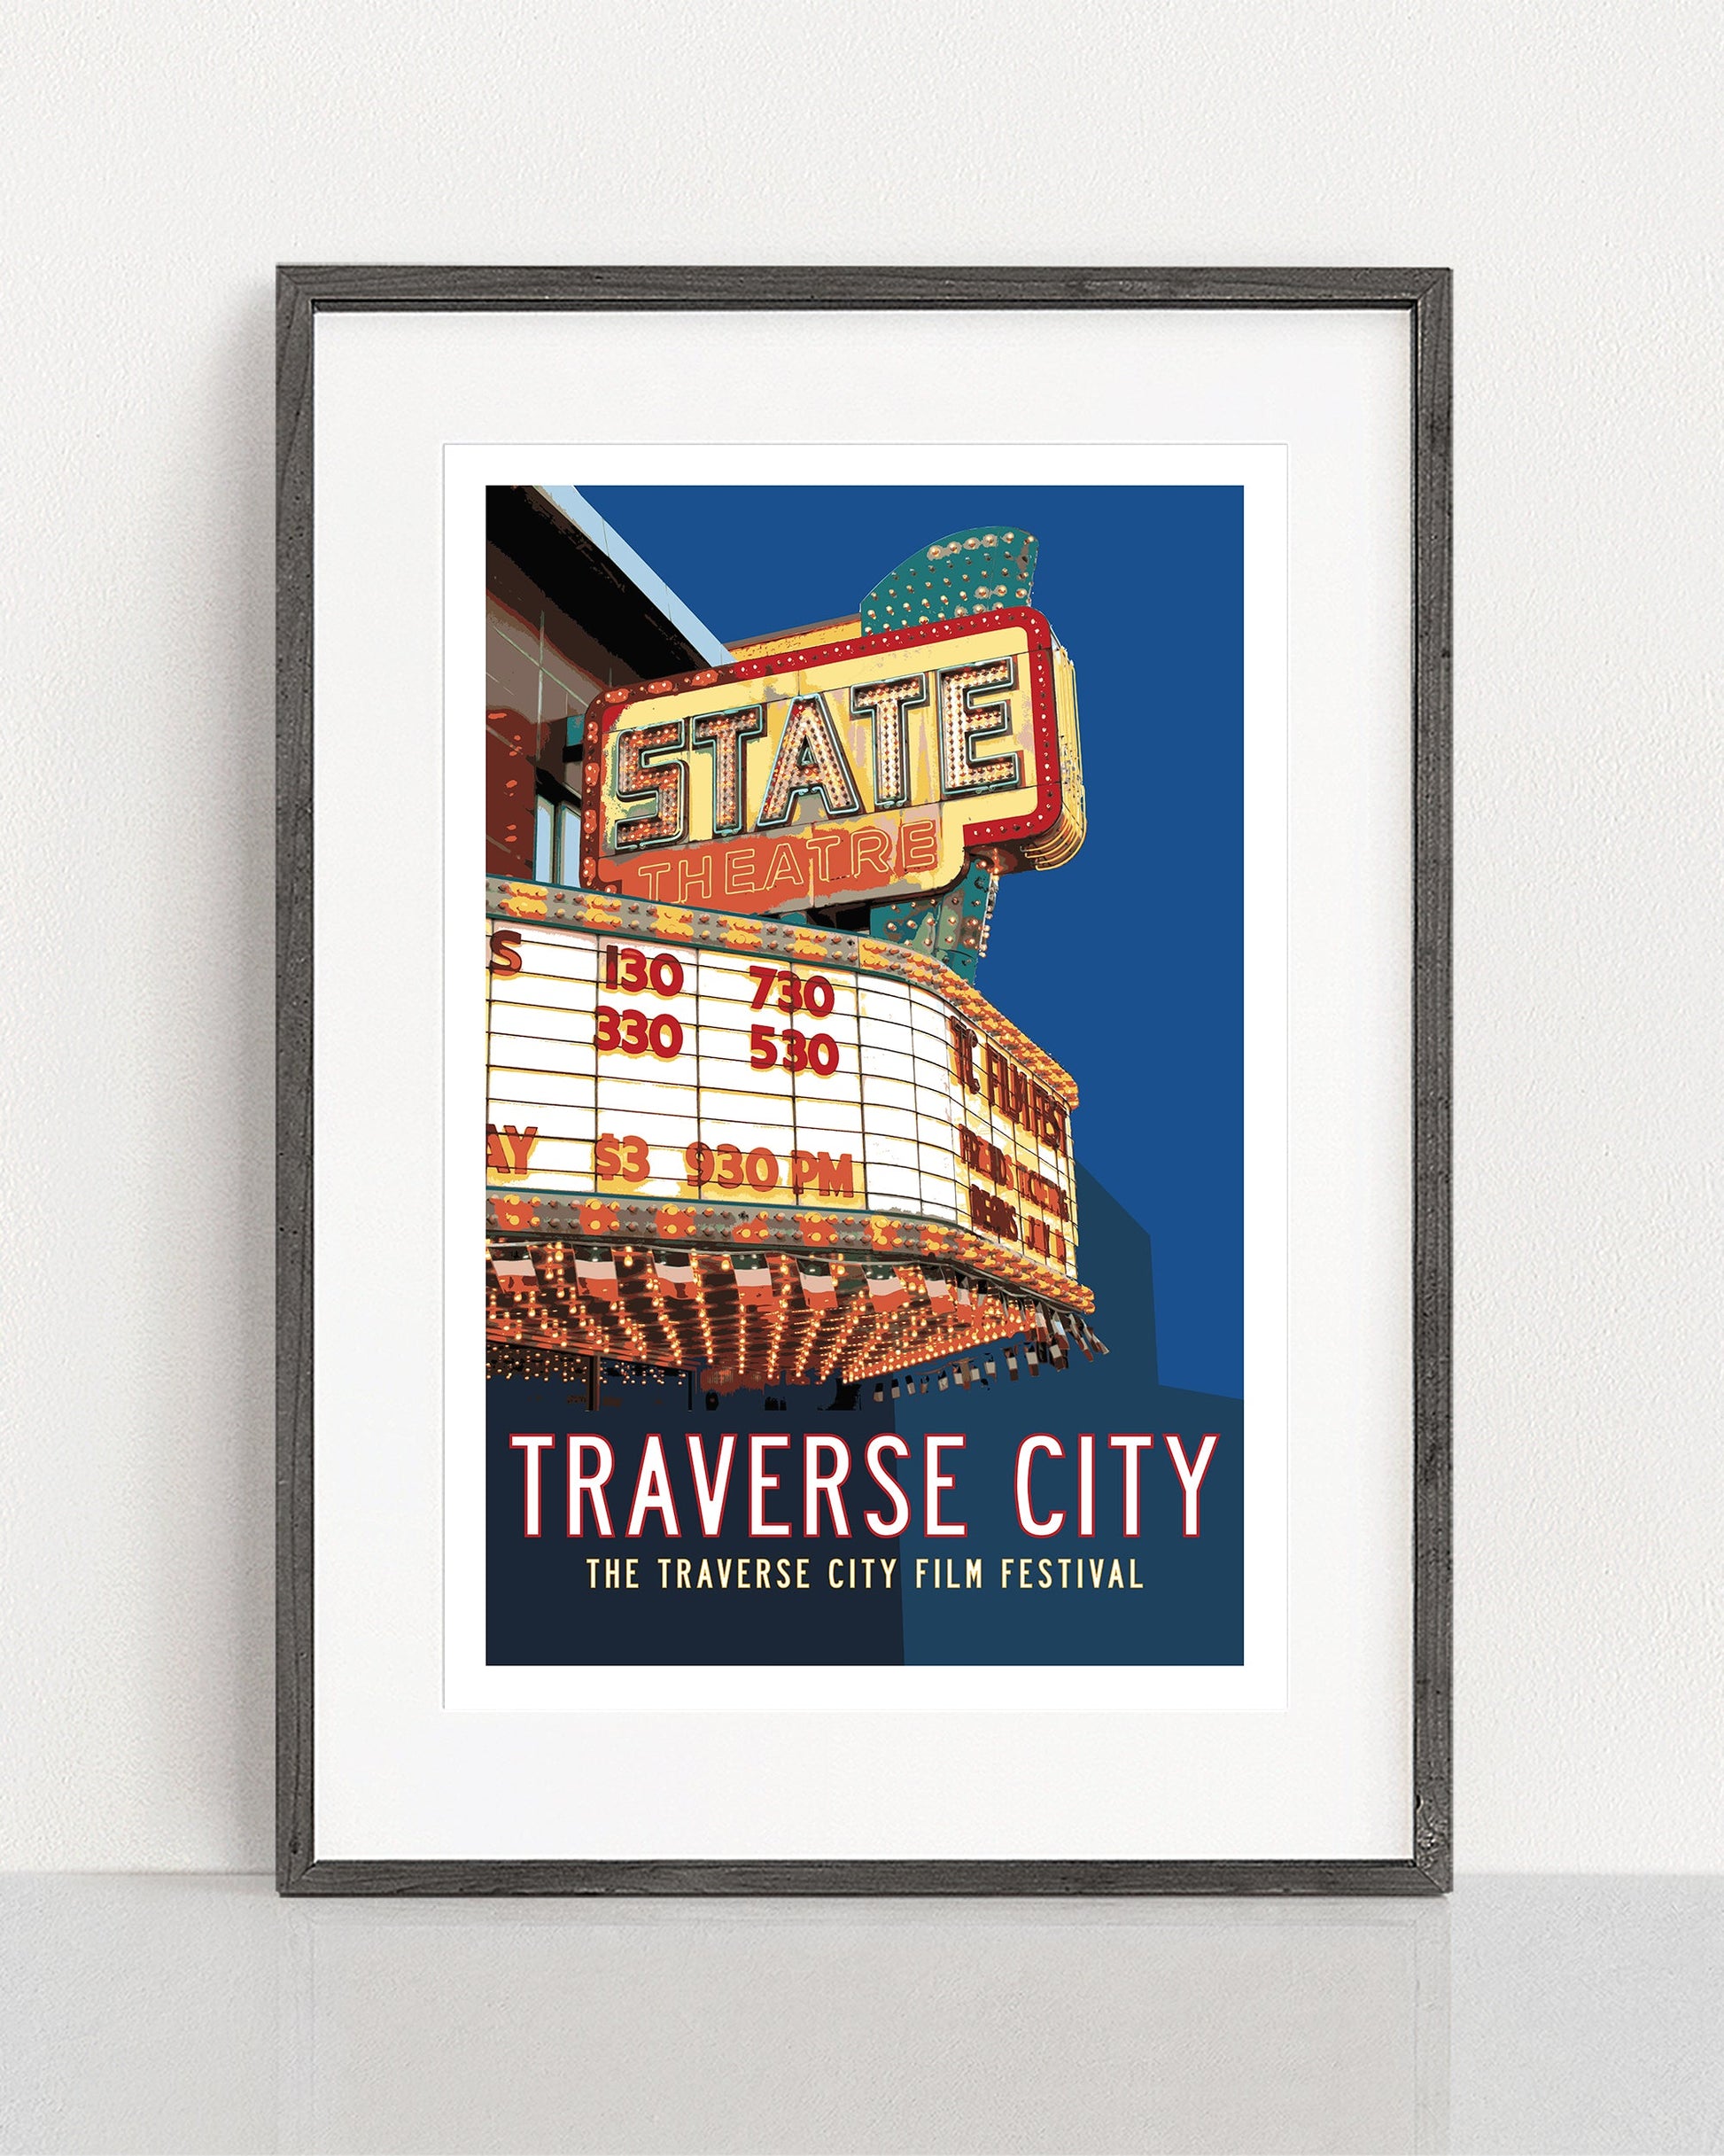 Traverse City State Theatre Film Festival Poster - Transit Design - Transit Design